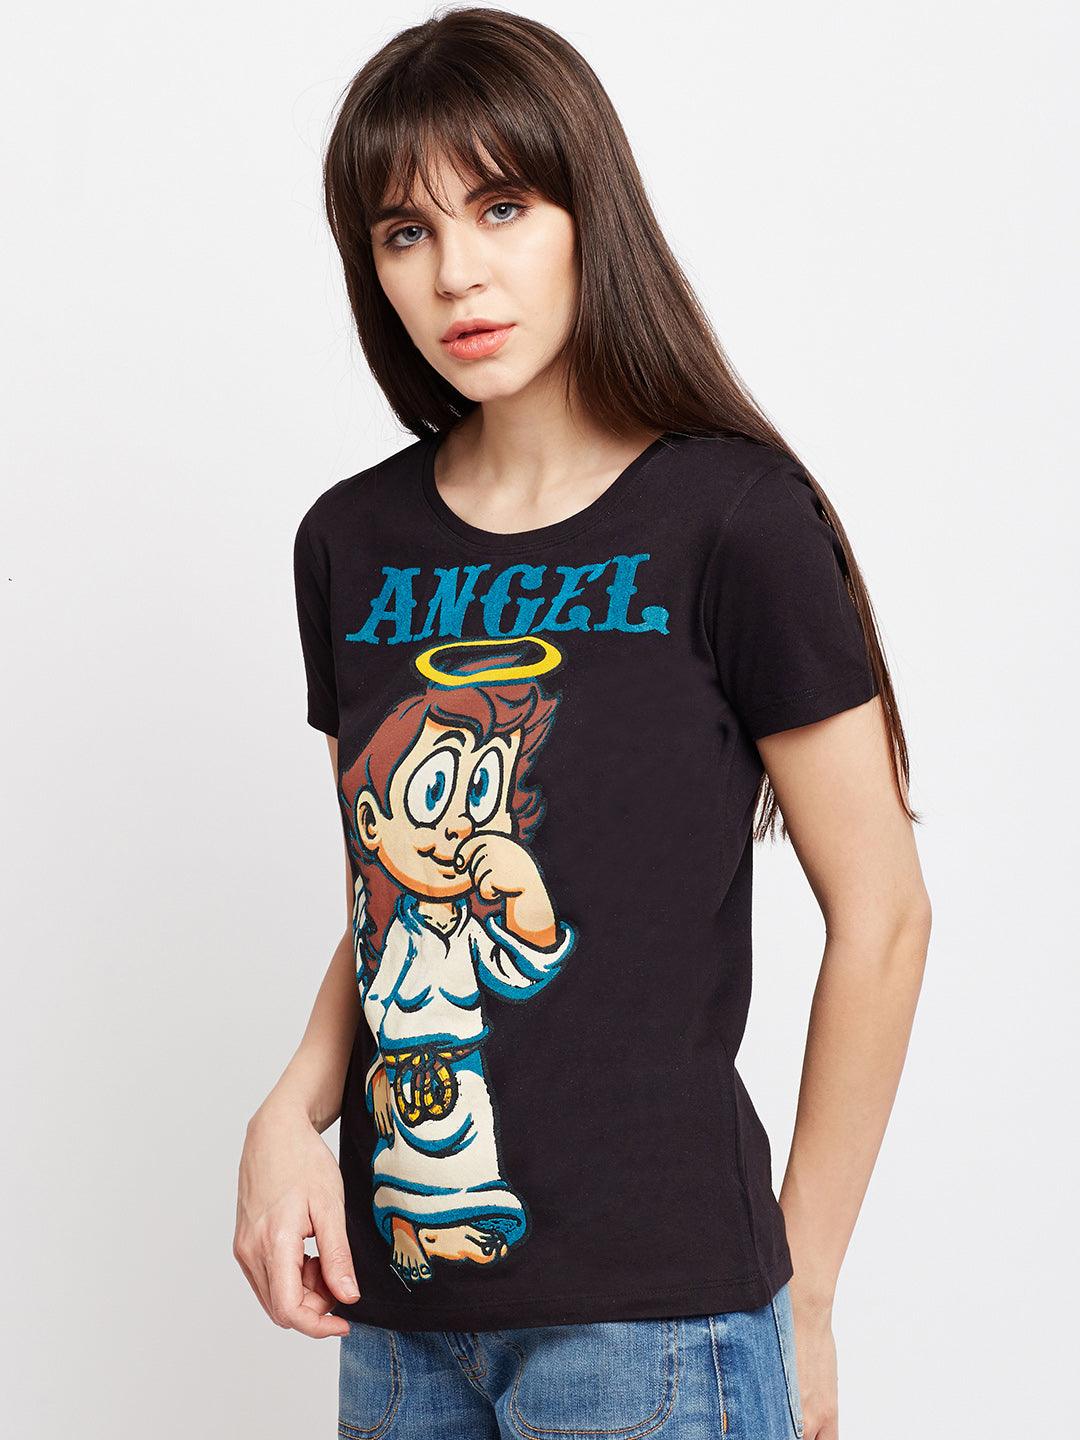 ANGEL - Punk